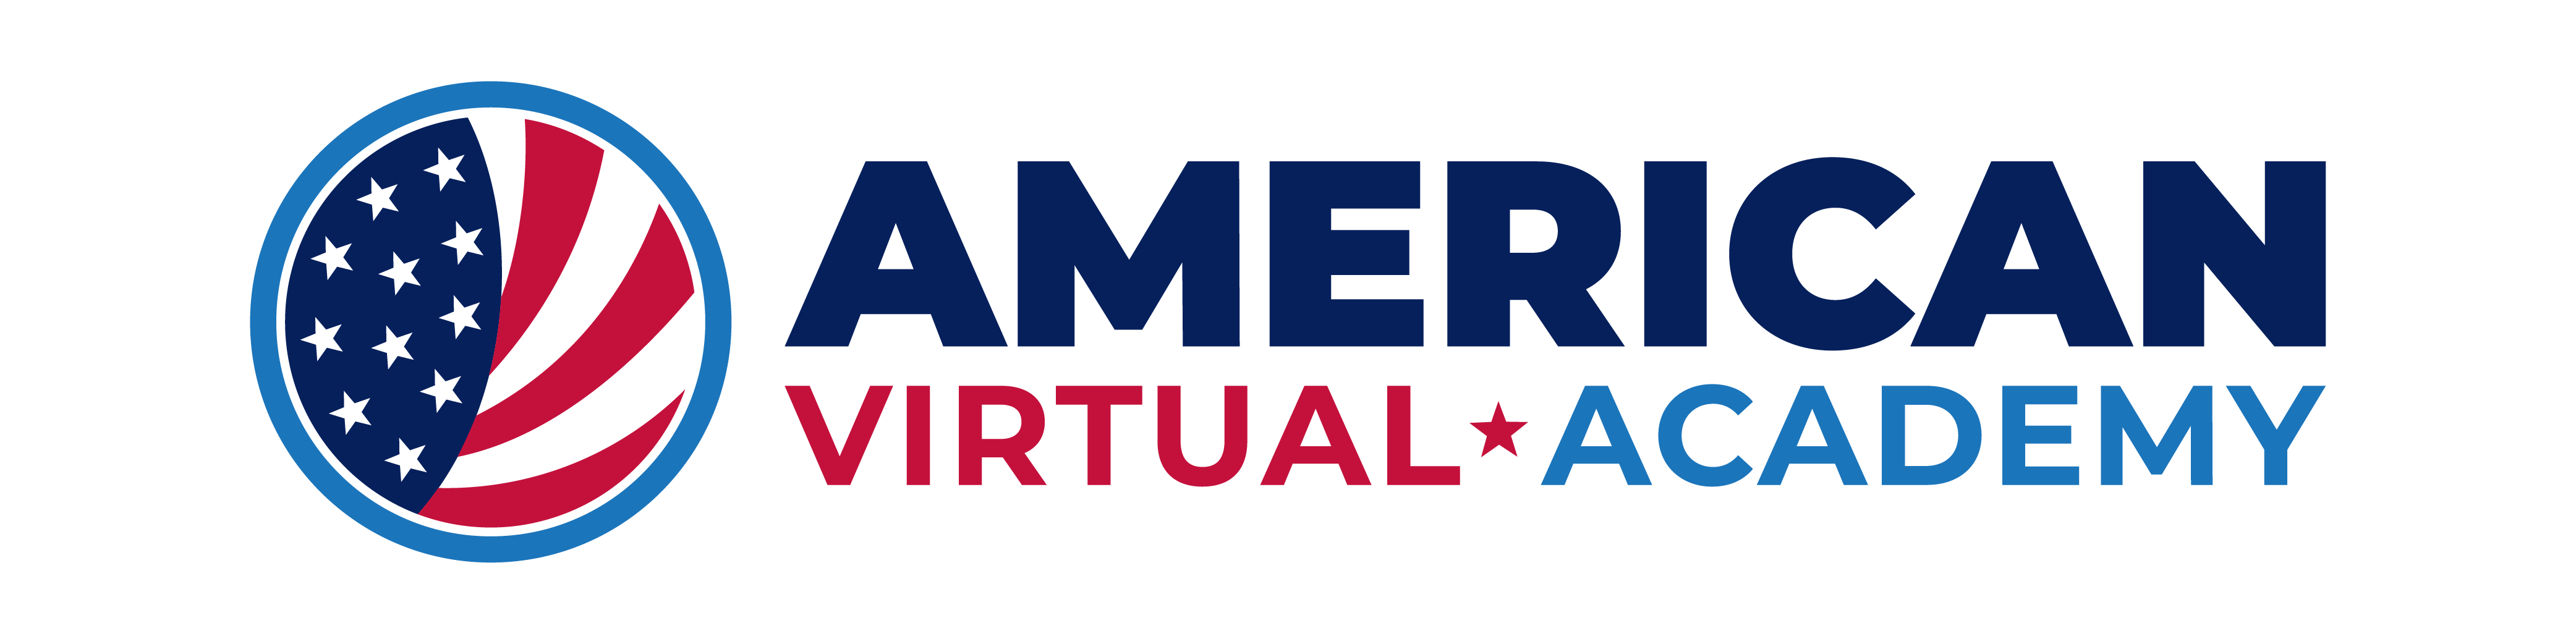 American virtual academy